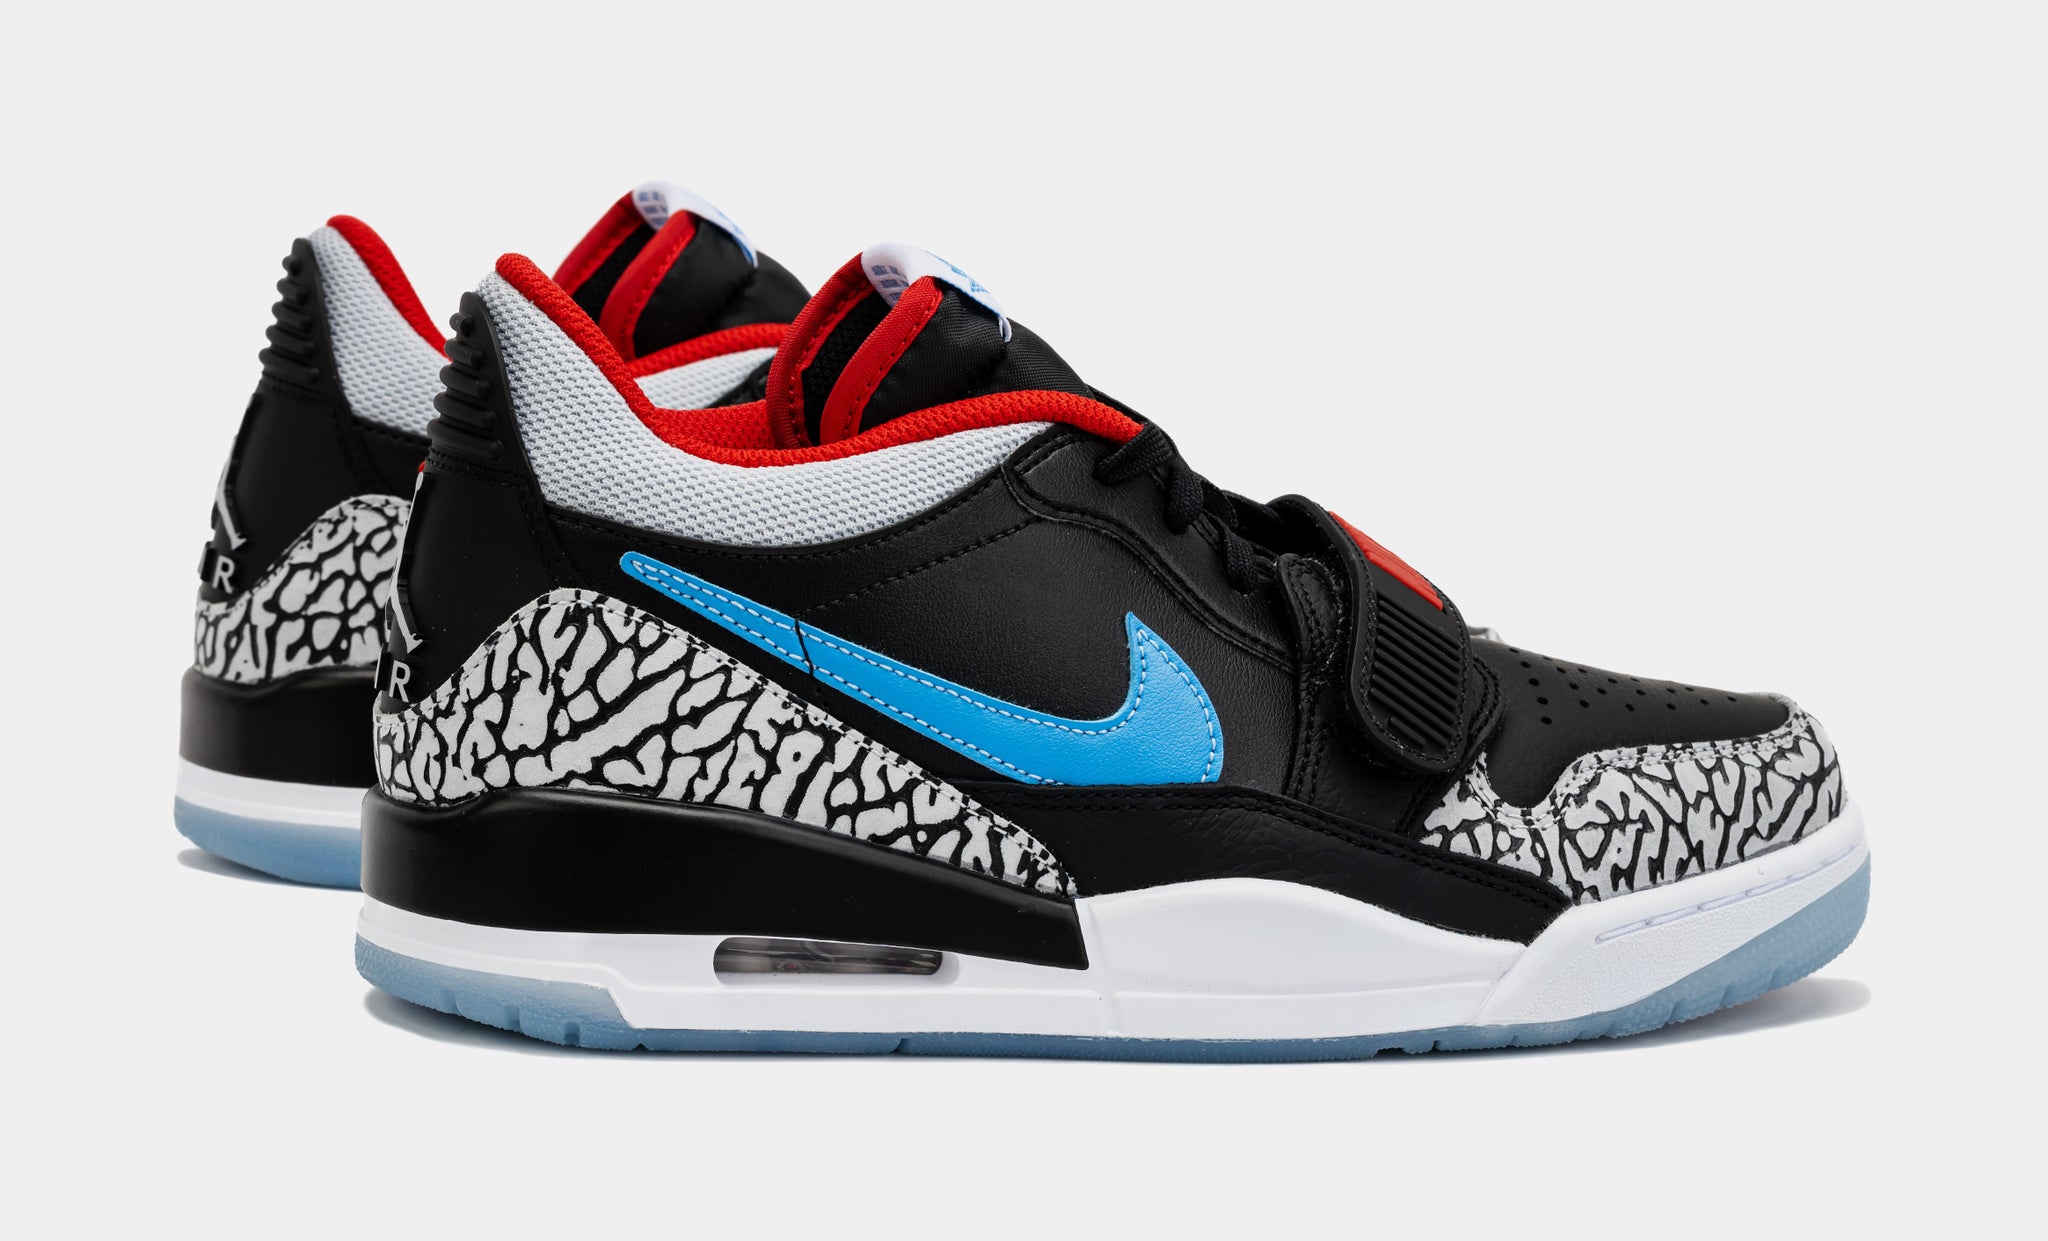 Air Jordan Legacy 312 Low Mens Basketball Shoes (Black/Blue)